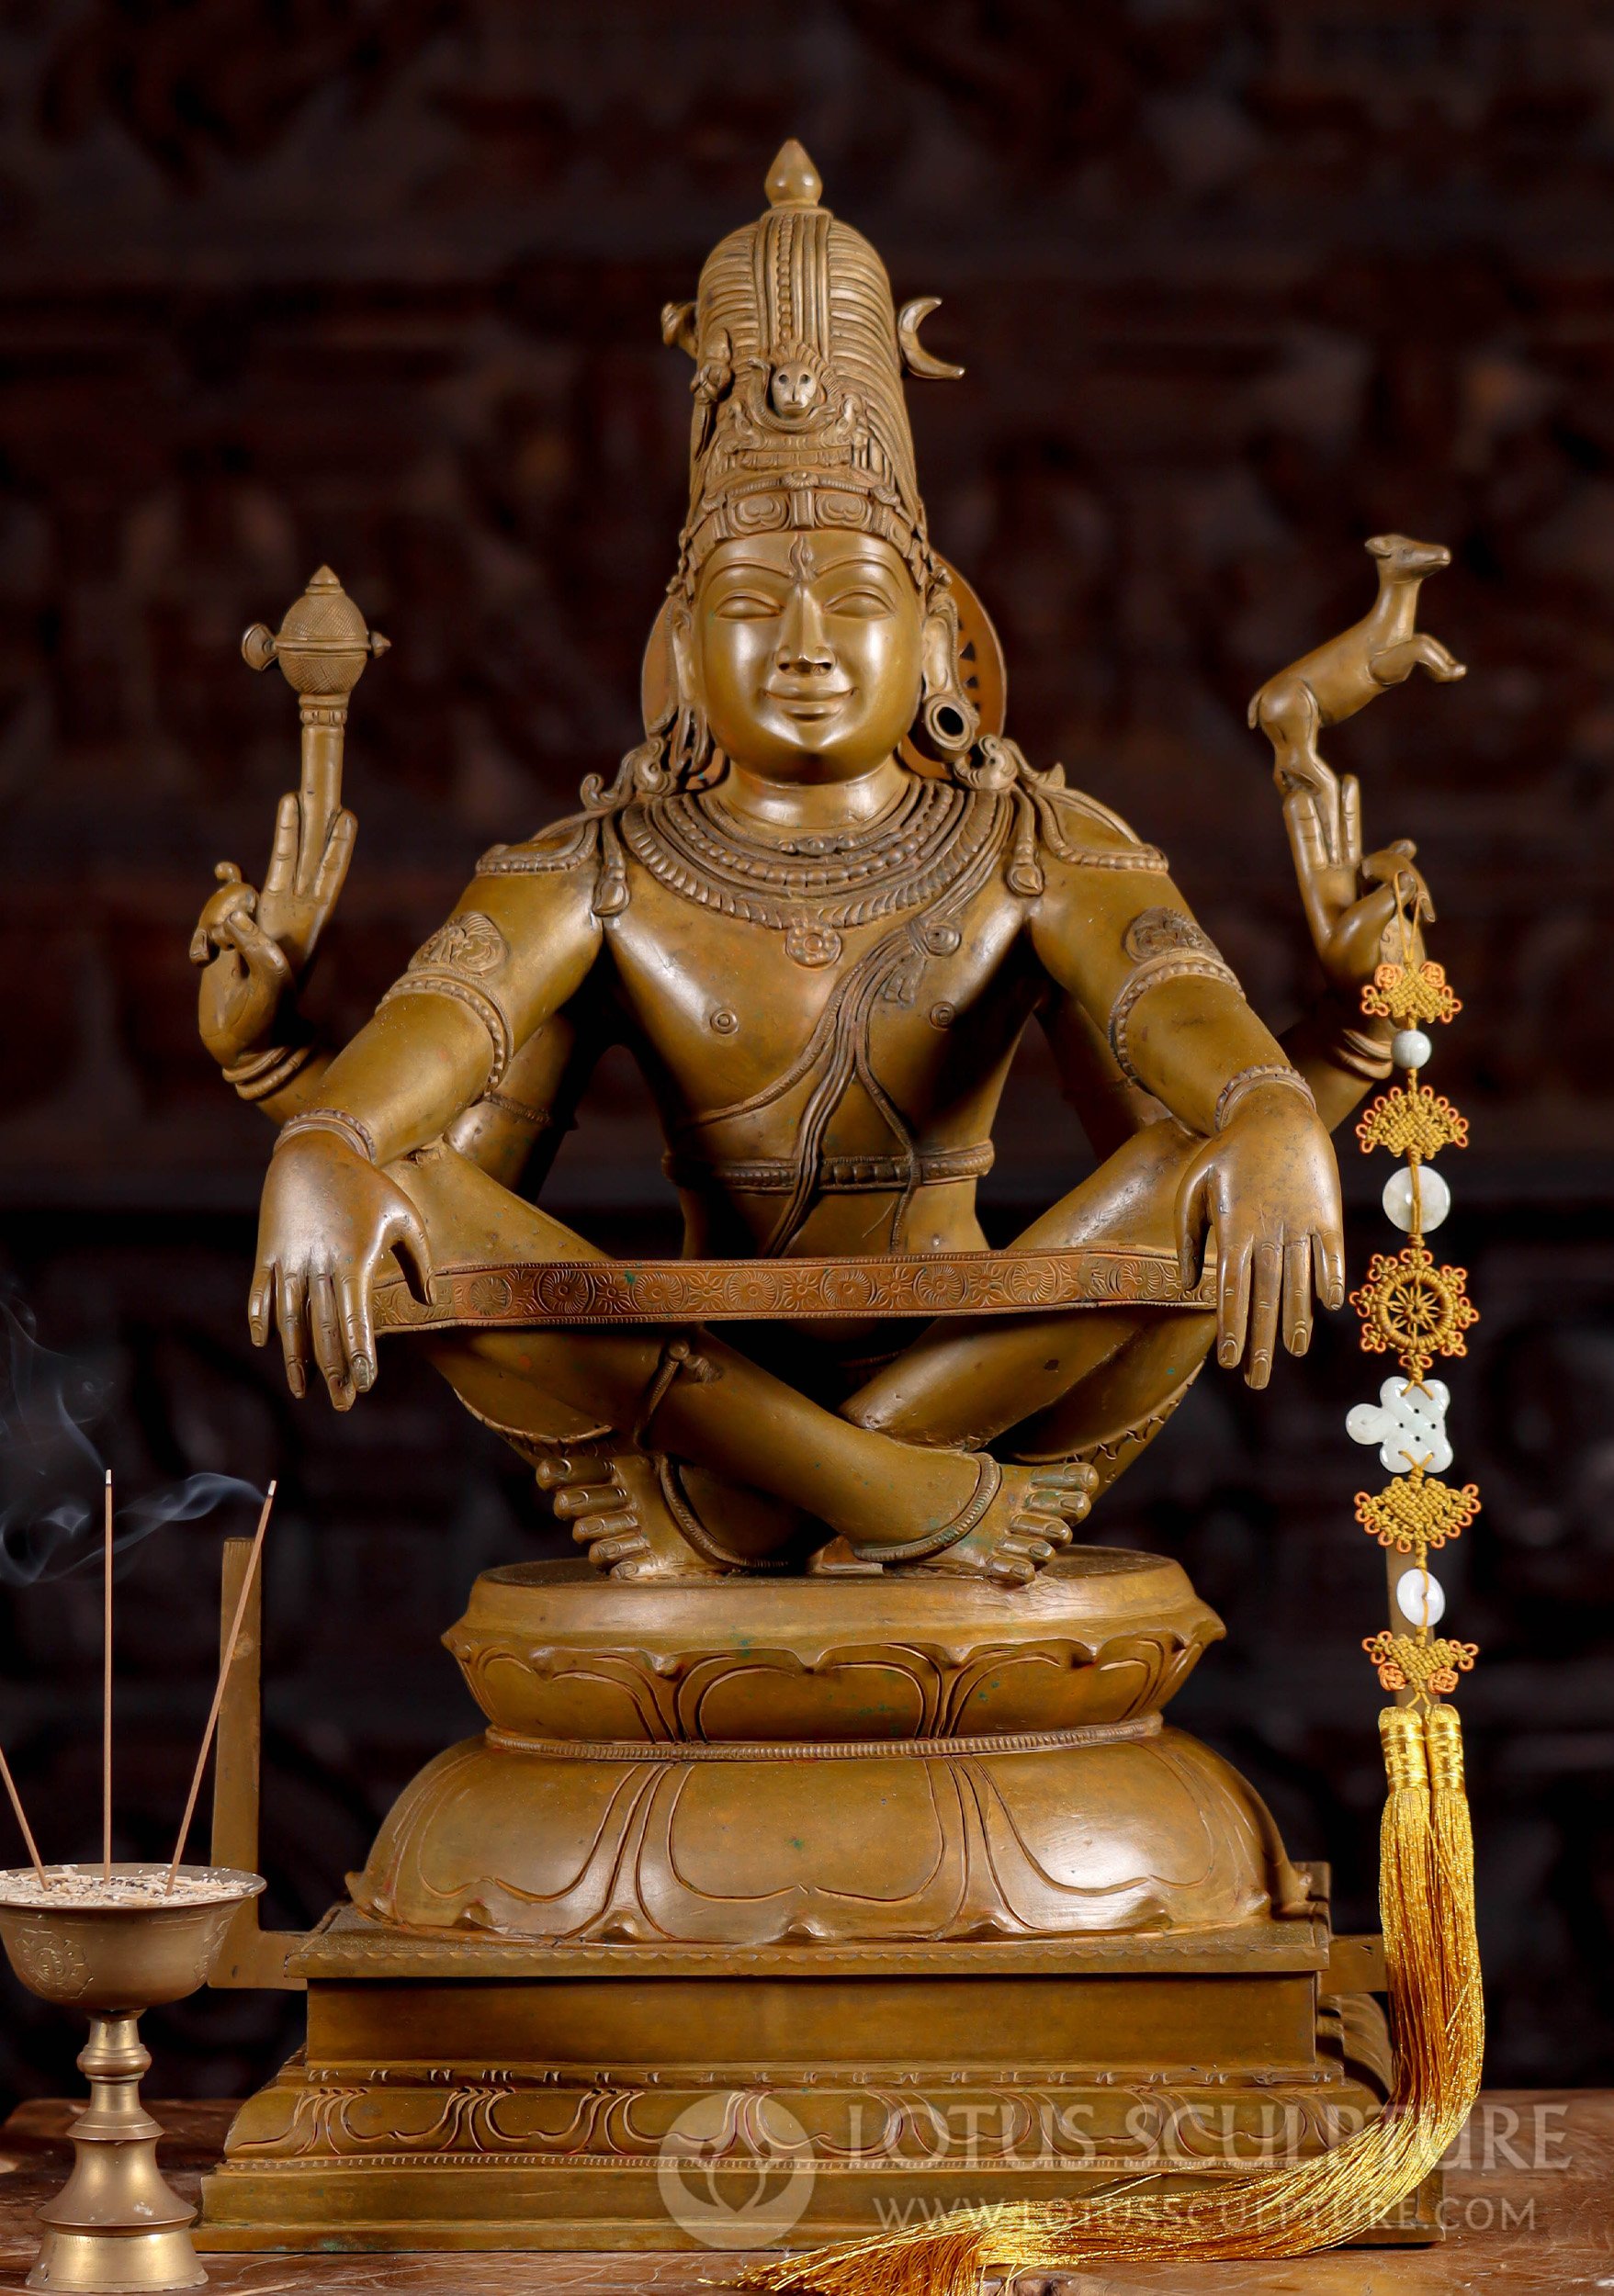 Discover Yoga with The Jai Jais | Yoga, Lettering, Hindu gods